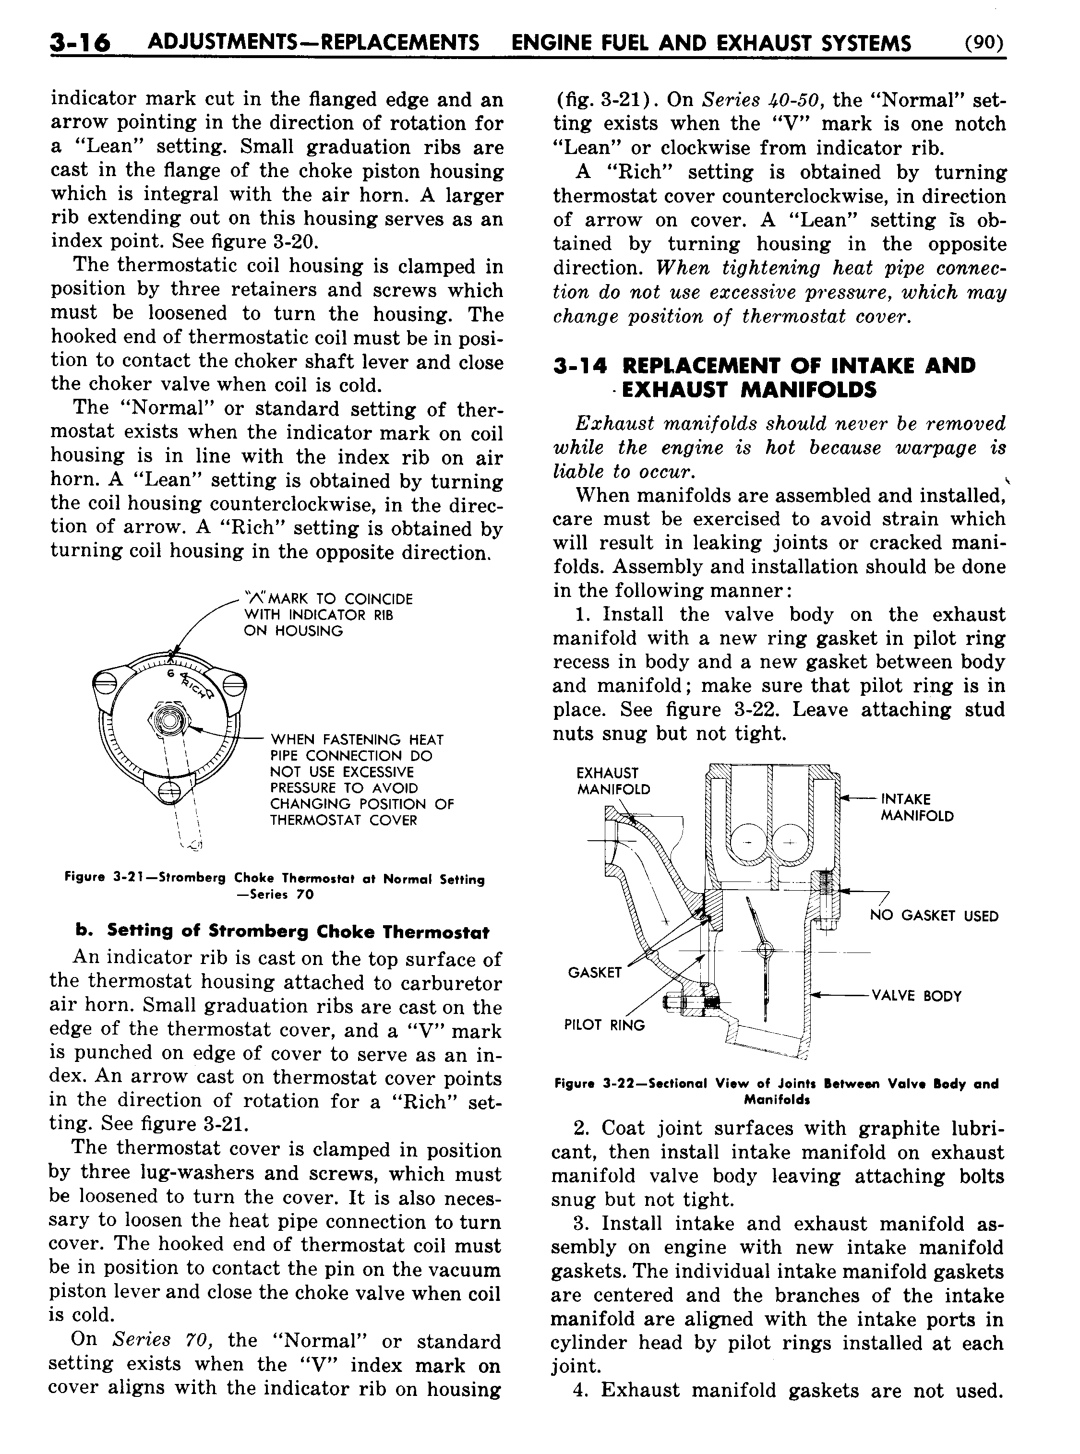 n_04 1948 Buick Shop Manual - Engine Fuel & Exhaust-016-016.jpg